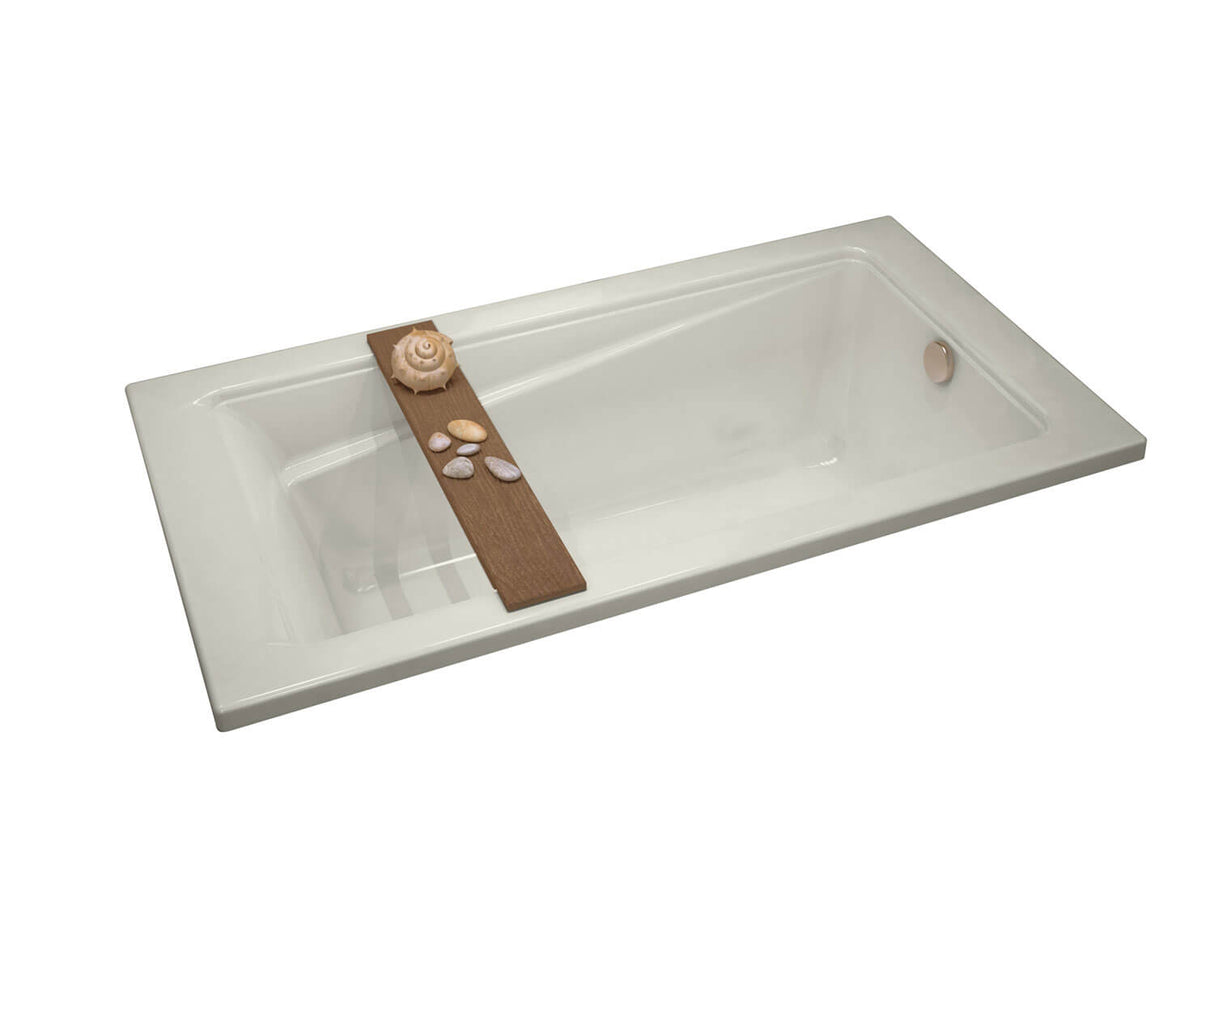 MAAX 106185-000-007 Exhibit 7242 Acrylic Drop-in End Drain Bathtub in Biscuit